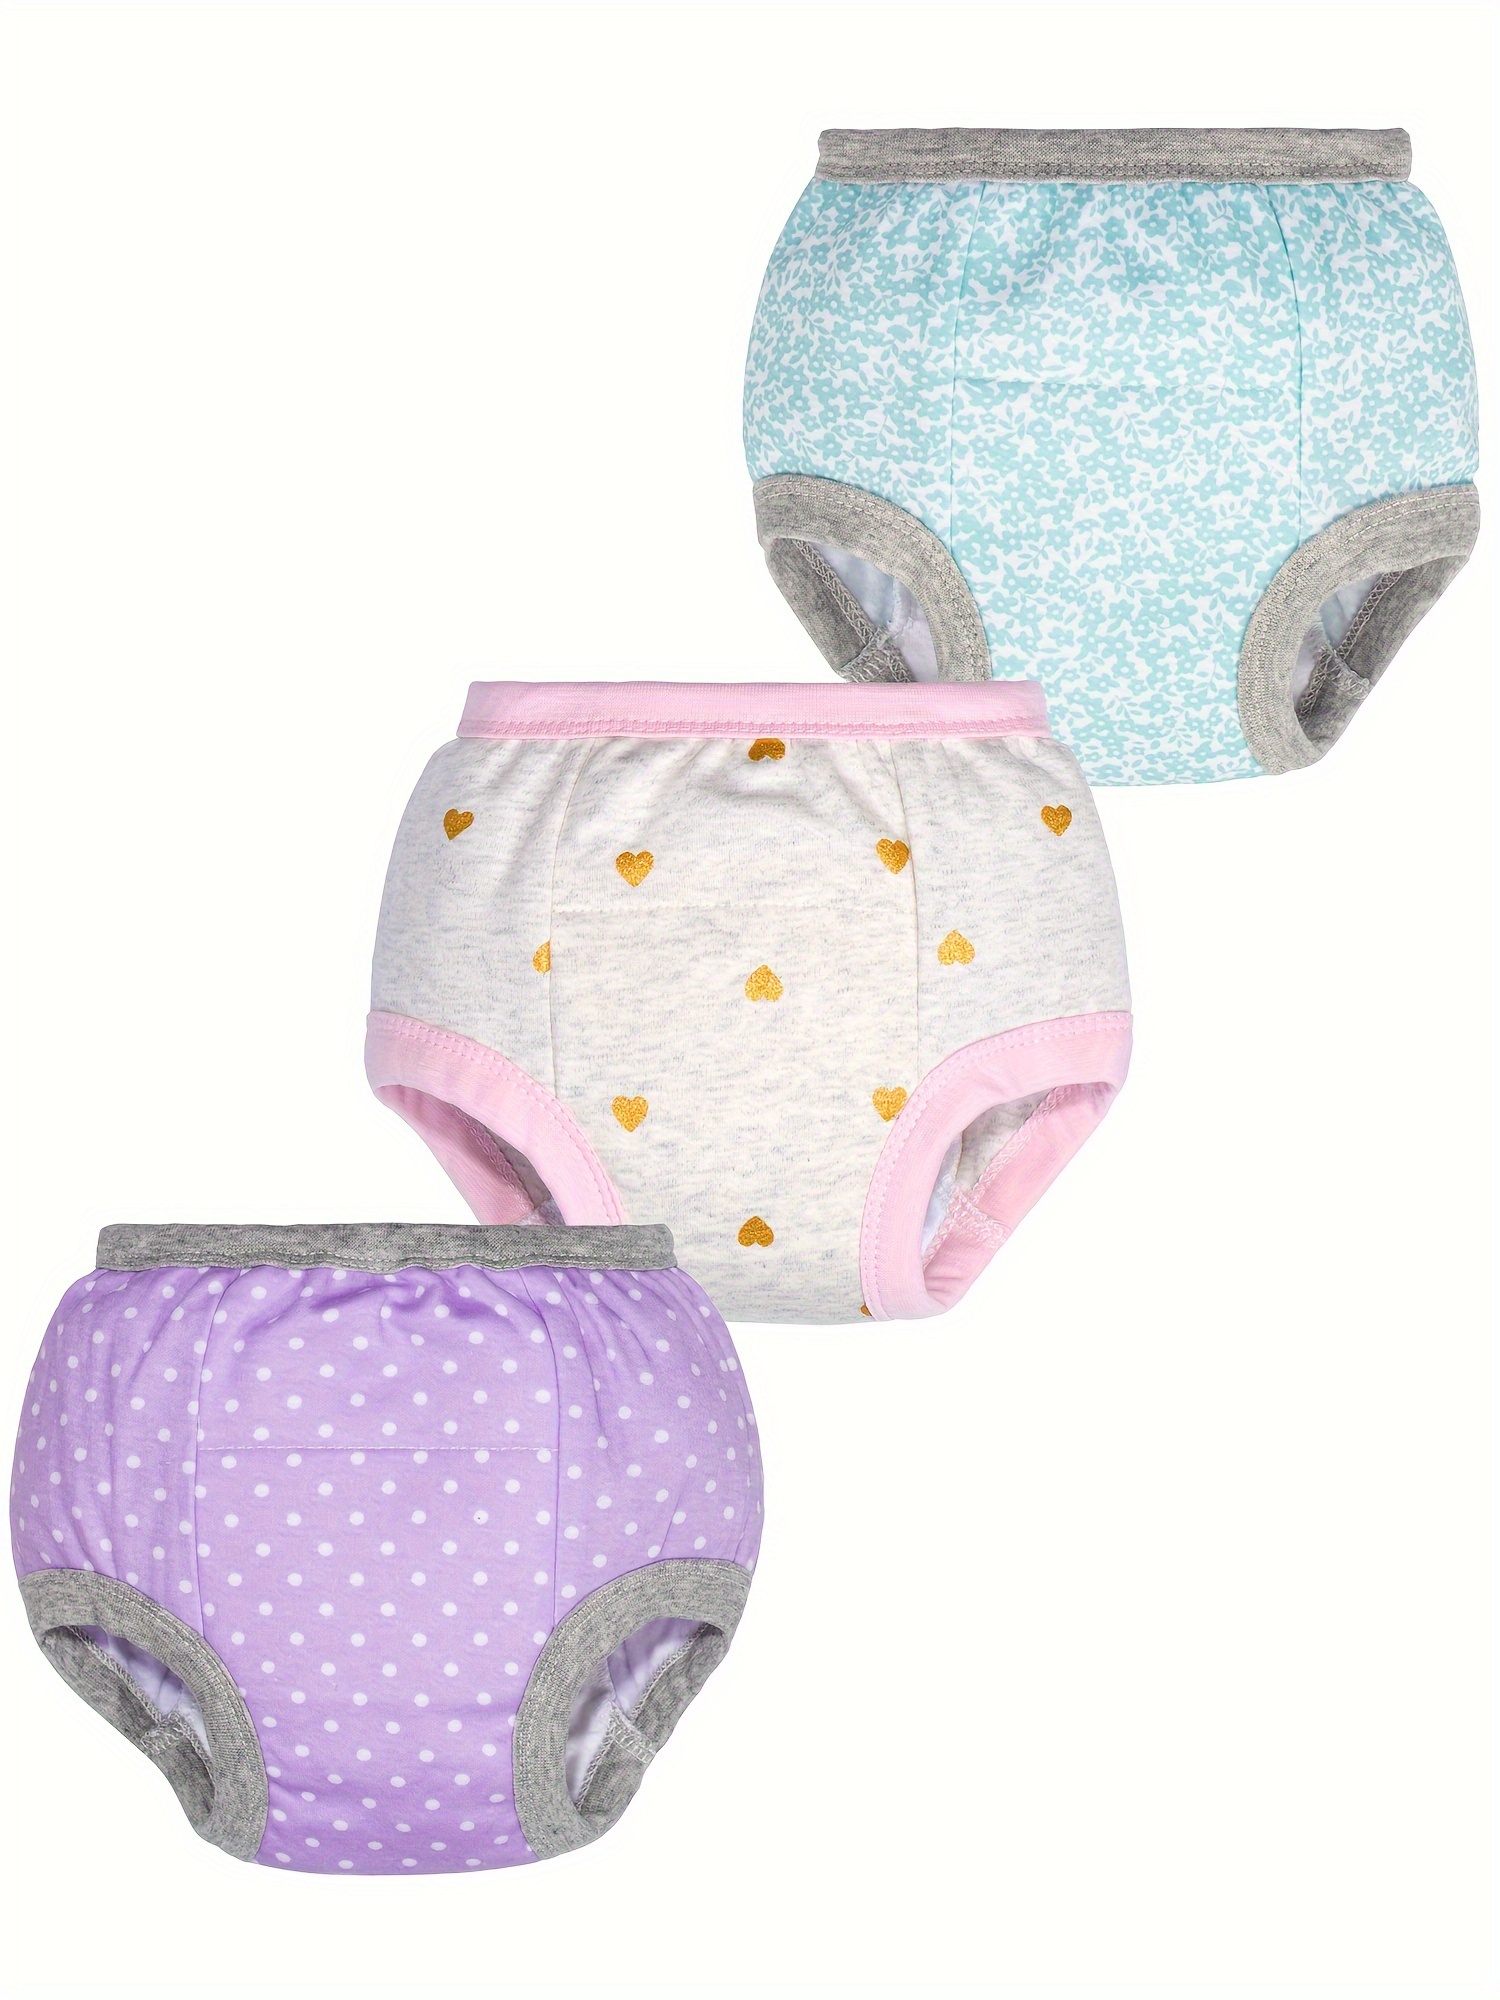 MooMoo Baby Waterproof Diaper Pants for Potty Training 2 Packs